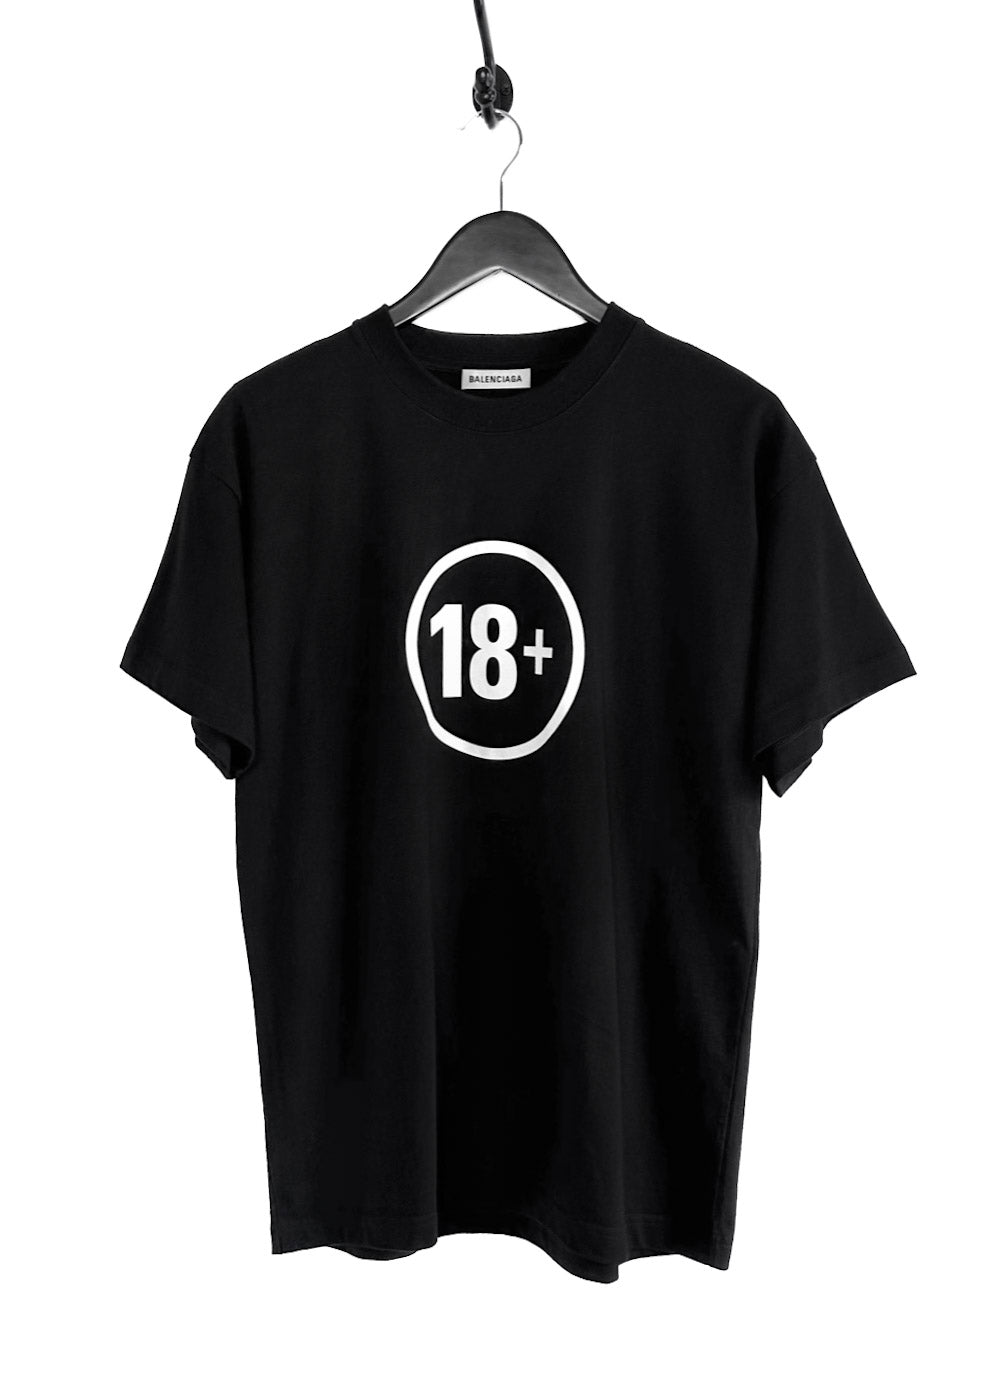 Balenciaga 2019 18+ Black Graphic T-shirt